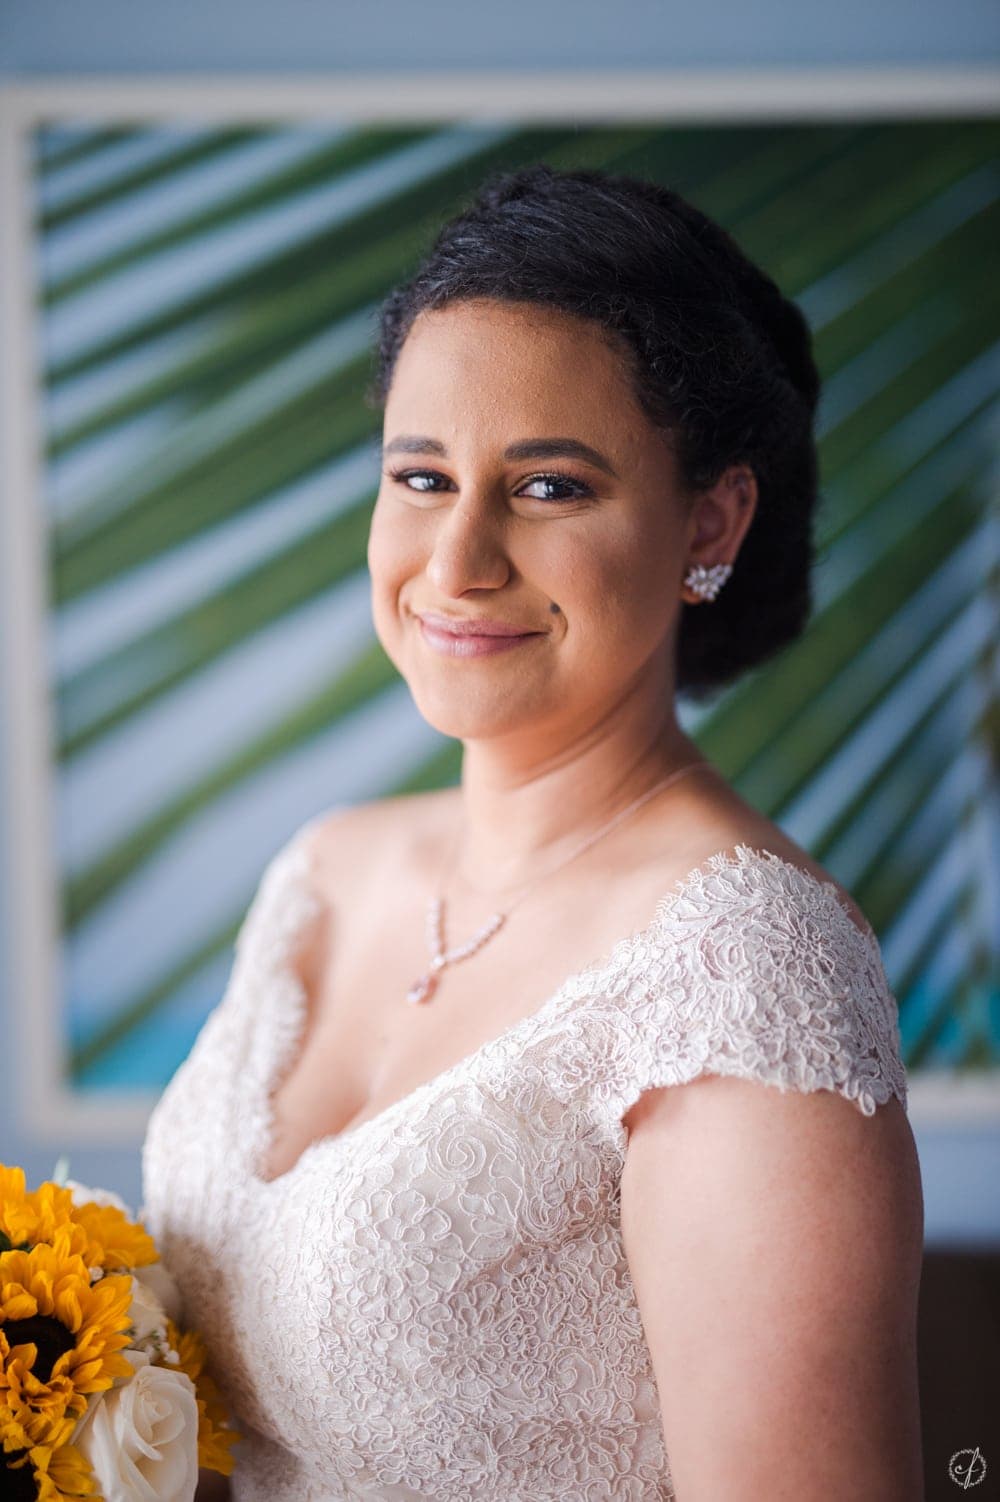 Fotografo de bodas en Comfort Inn en Levittown Puerto Rico